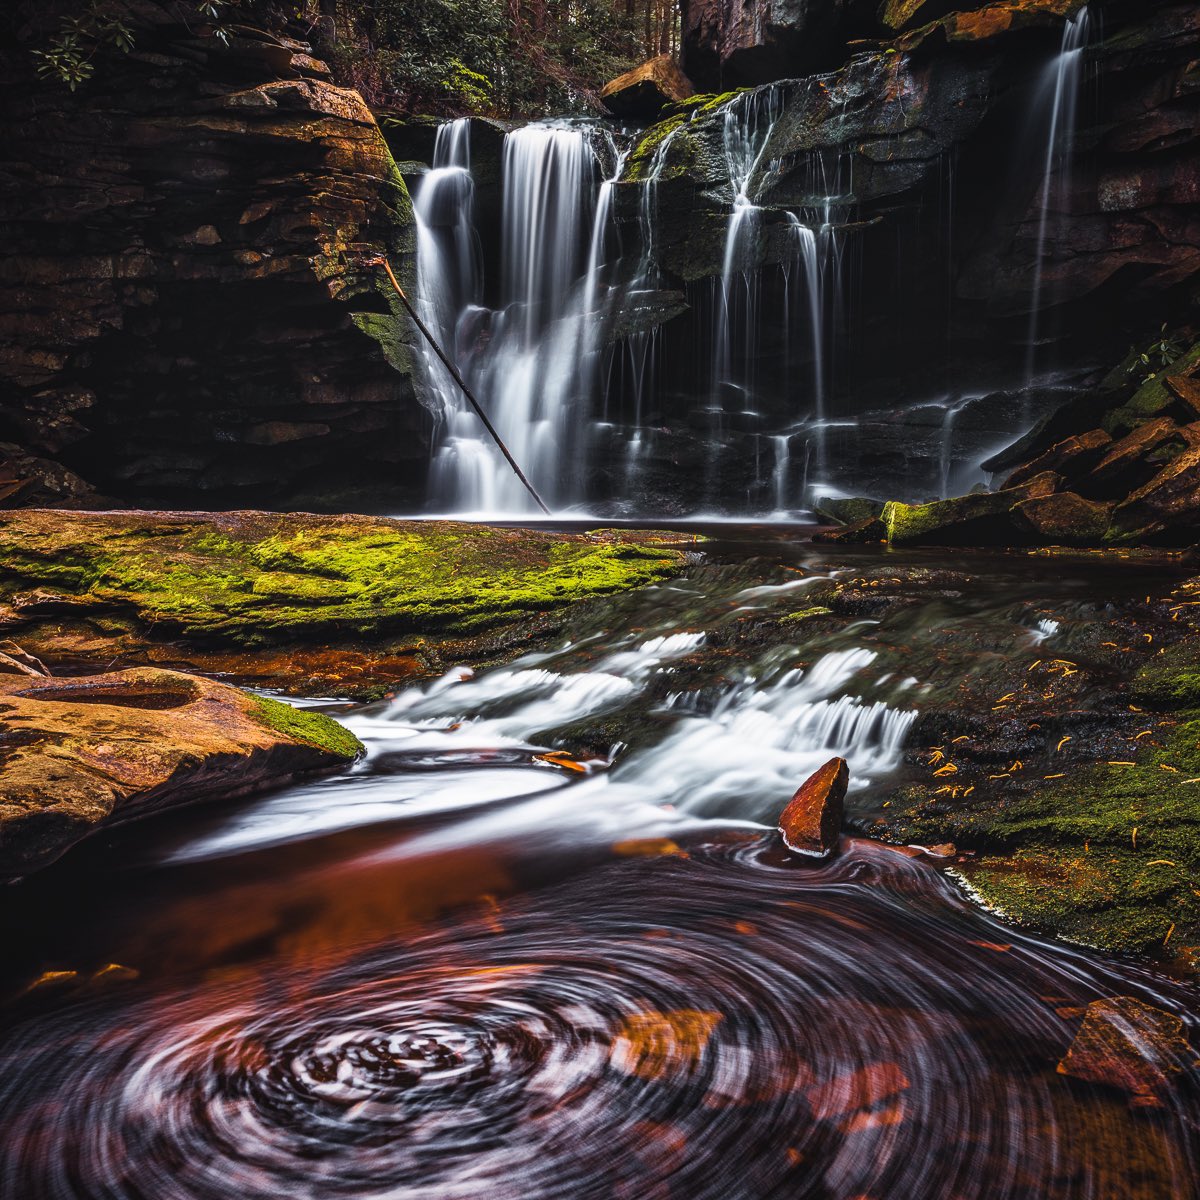 📍Elakala Falls, West Virginia

@WVtourism #wildandwonderful #AlmostHeaven